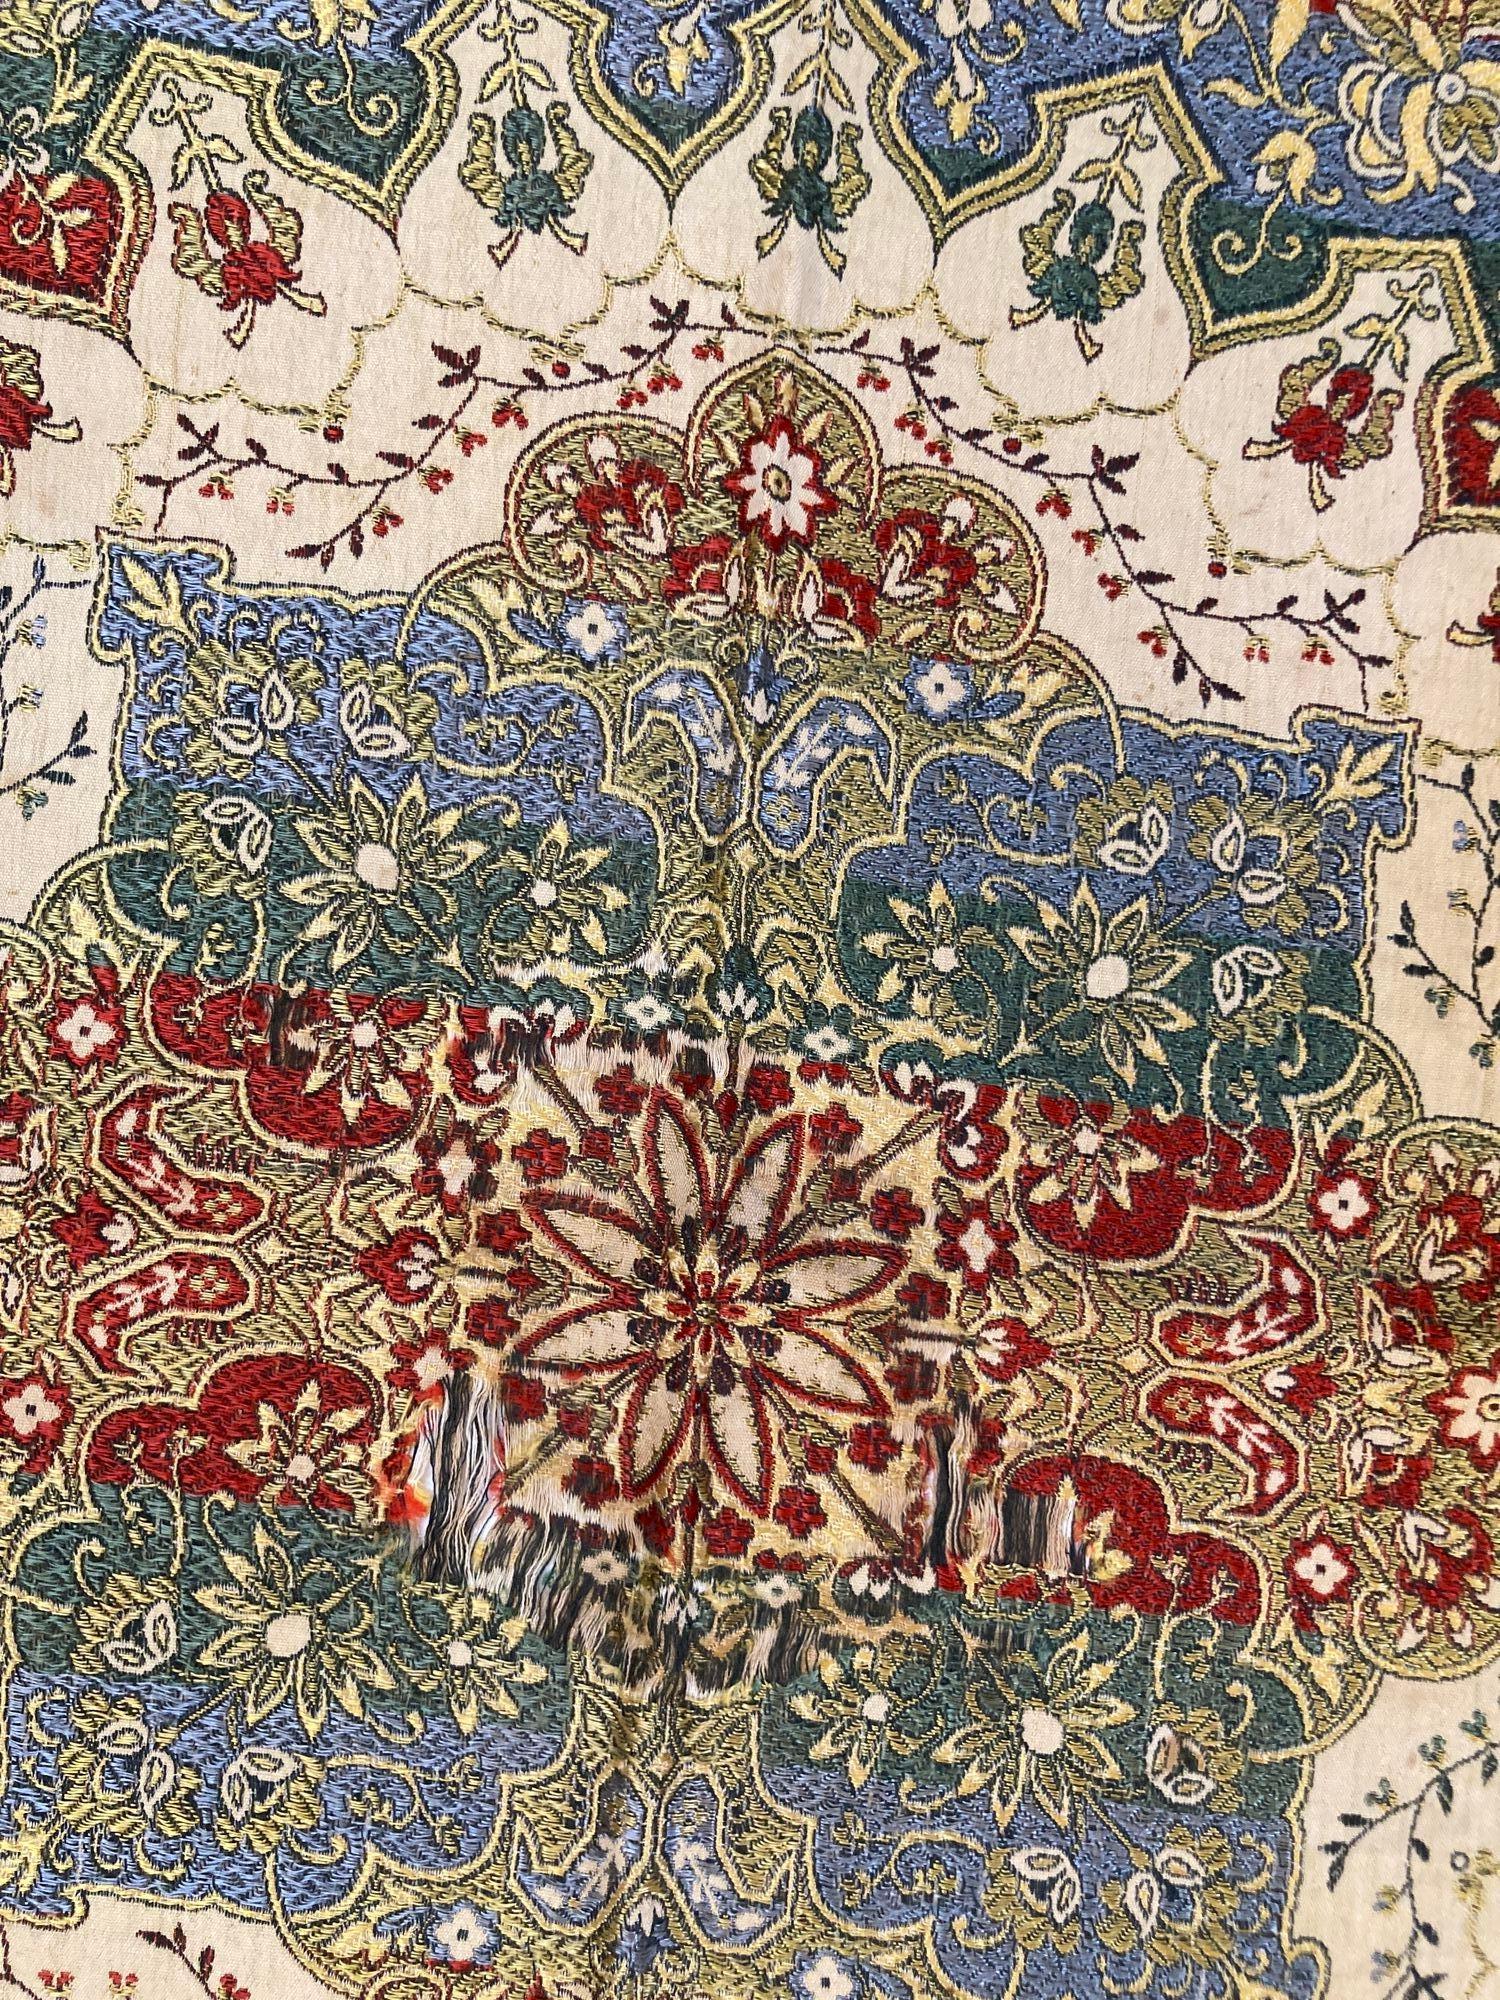 1920s Antique Granada Spain Moorish Islamic Tapestry with Arabic Writing 2